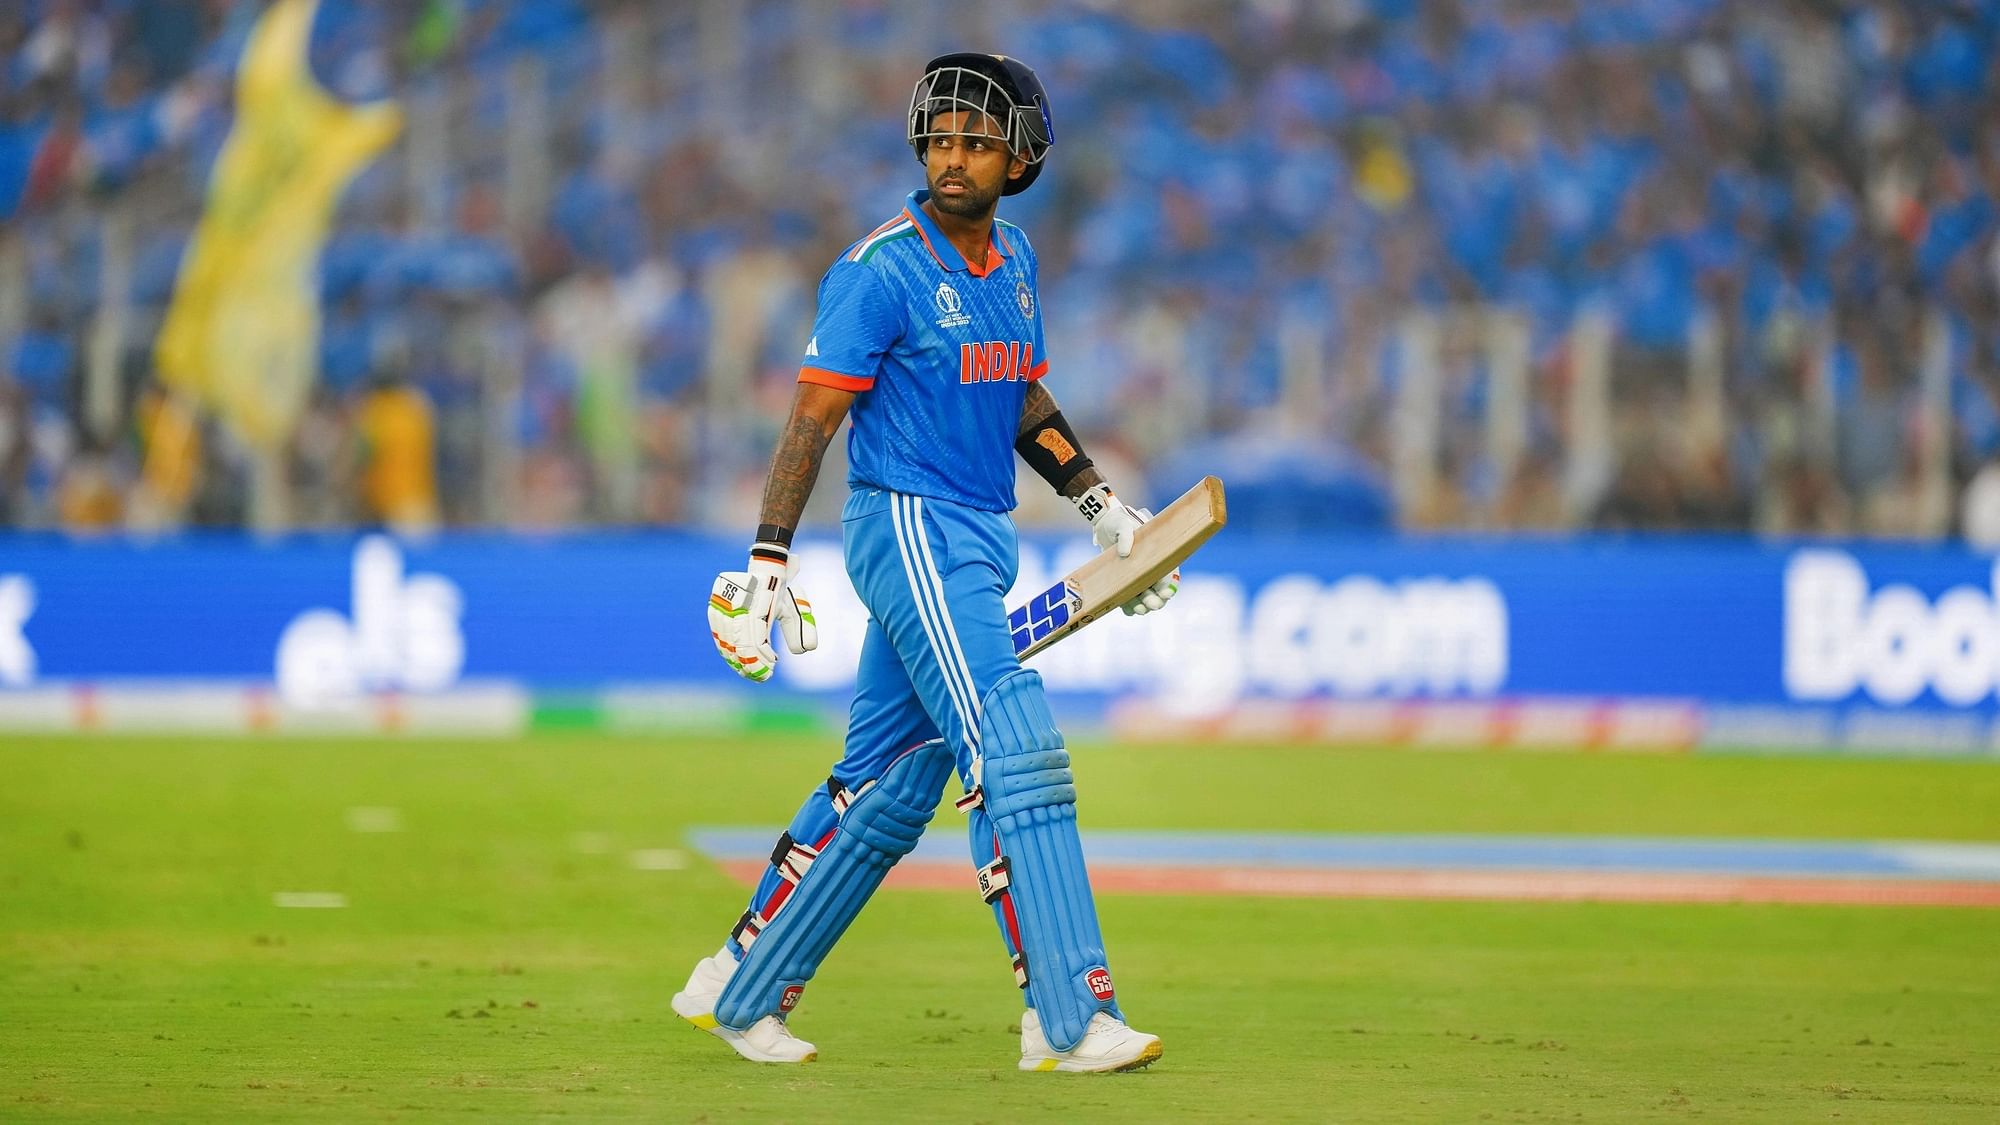 <div class="paragraphs"><p>Suryakumar Yadav will lead India against Australia in the T20I series.</p></div>